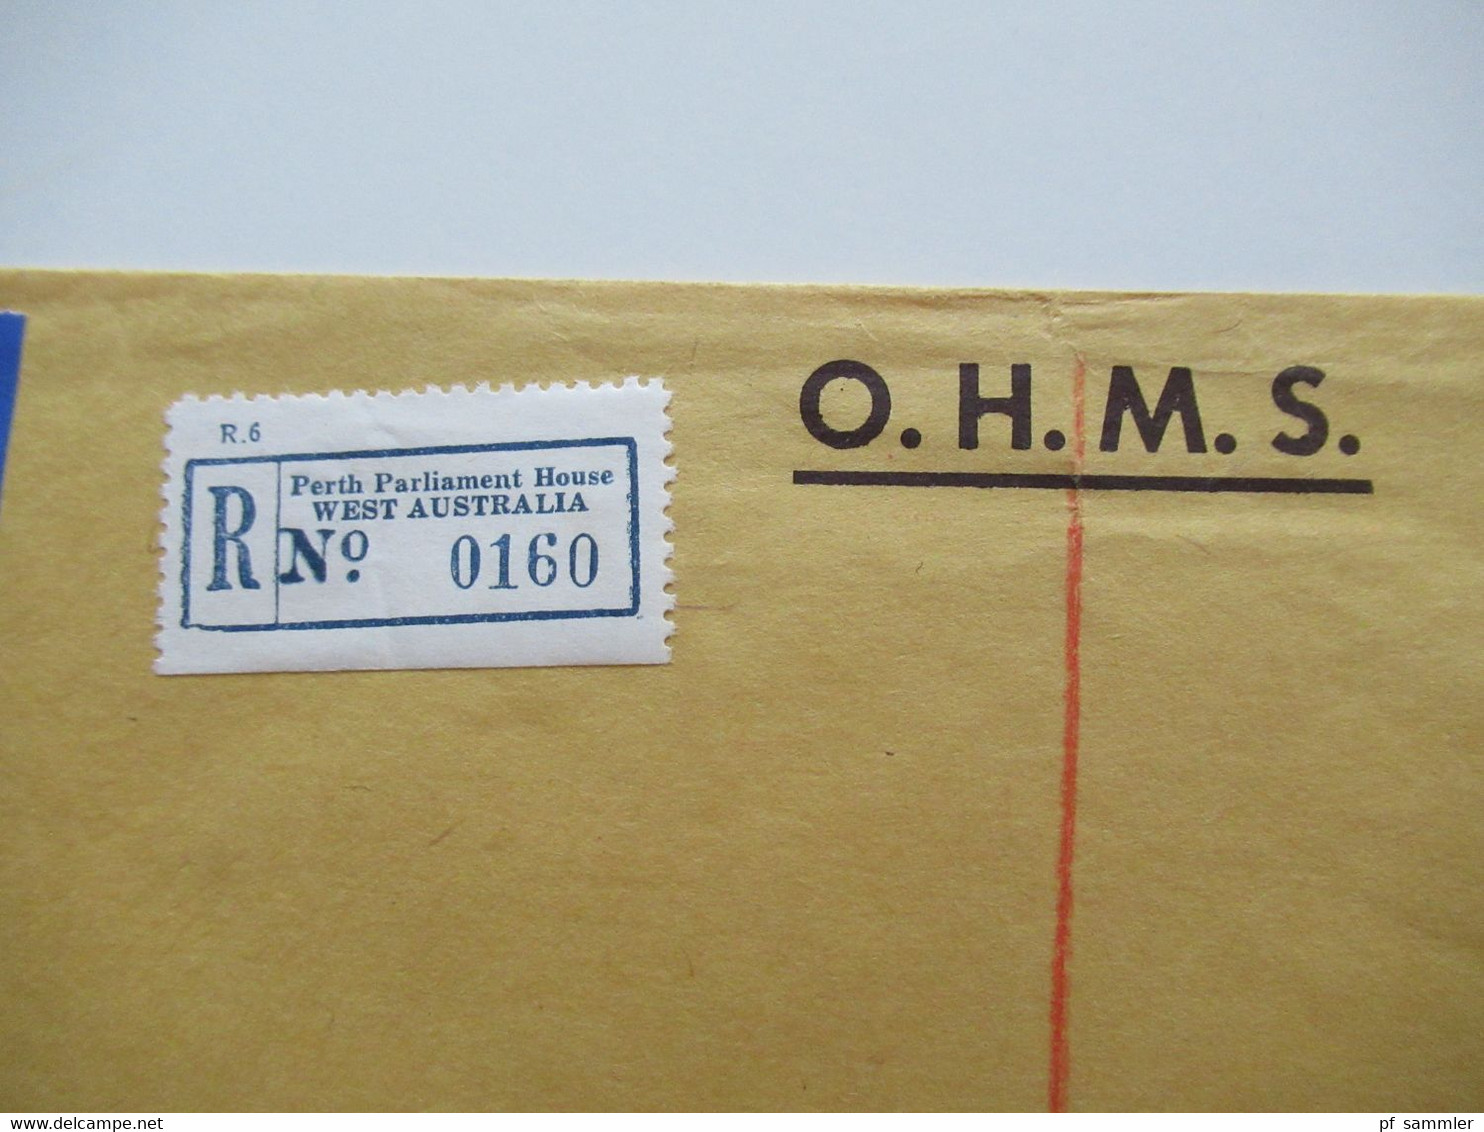 1980 Umschlag OHMS Und Stempel Legislative Council Parliament House Perth W.A Einschreiben Perth Parliament House - Briefe U. Dokumente